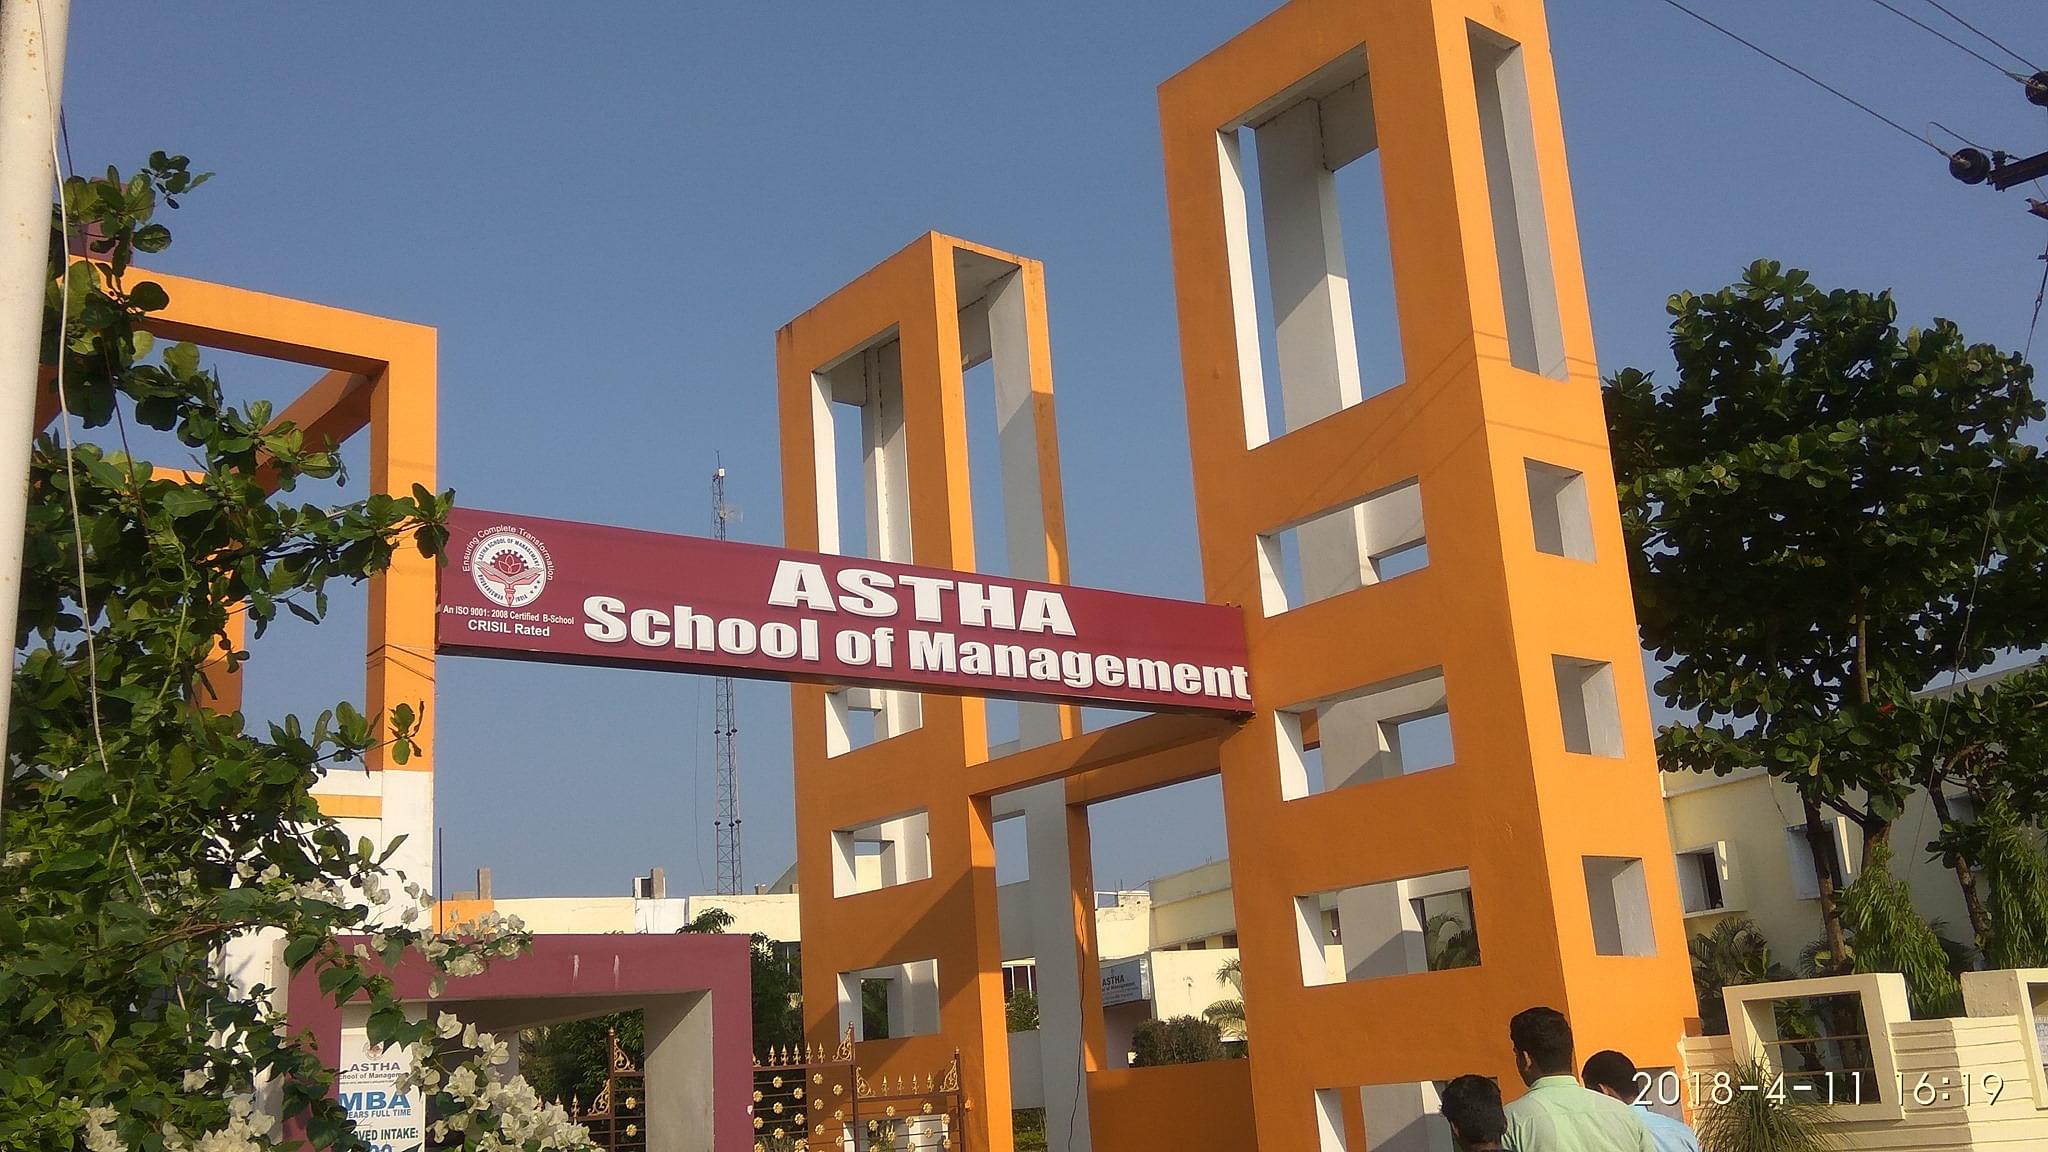 Astha School of Management